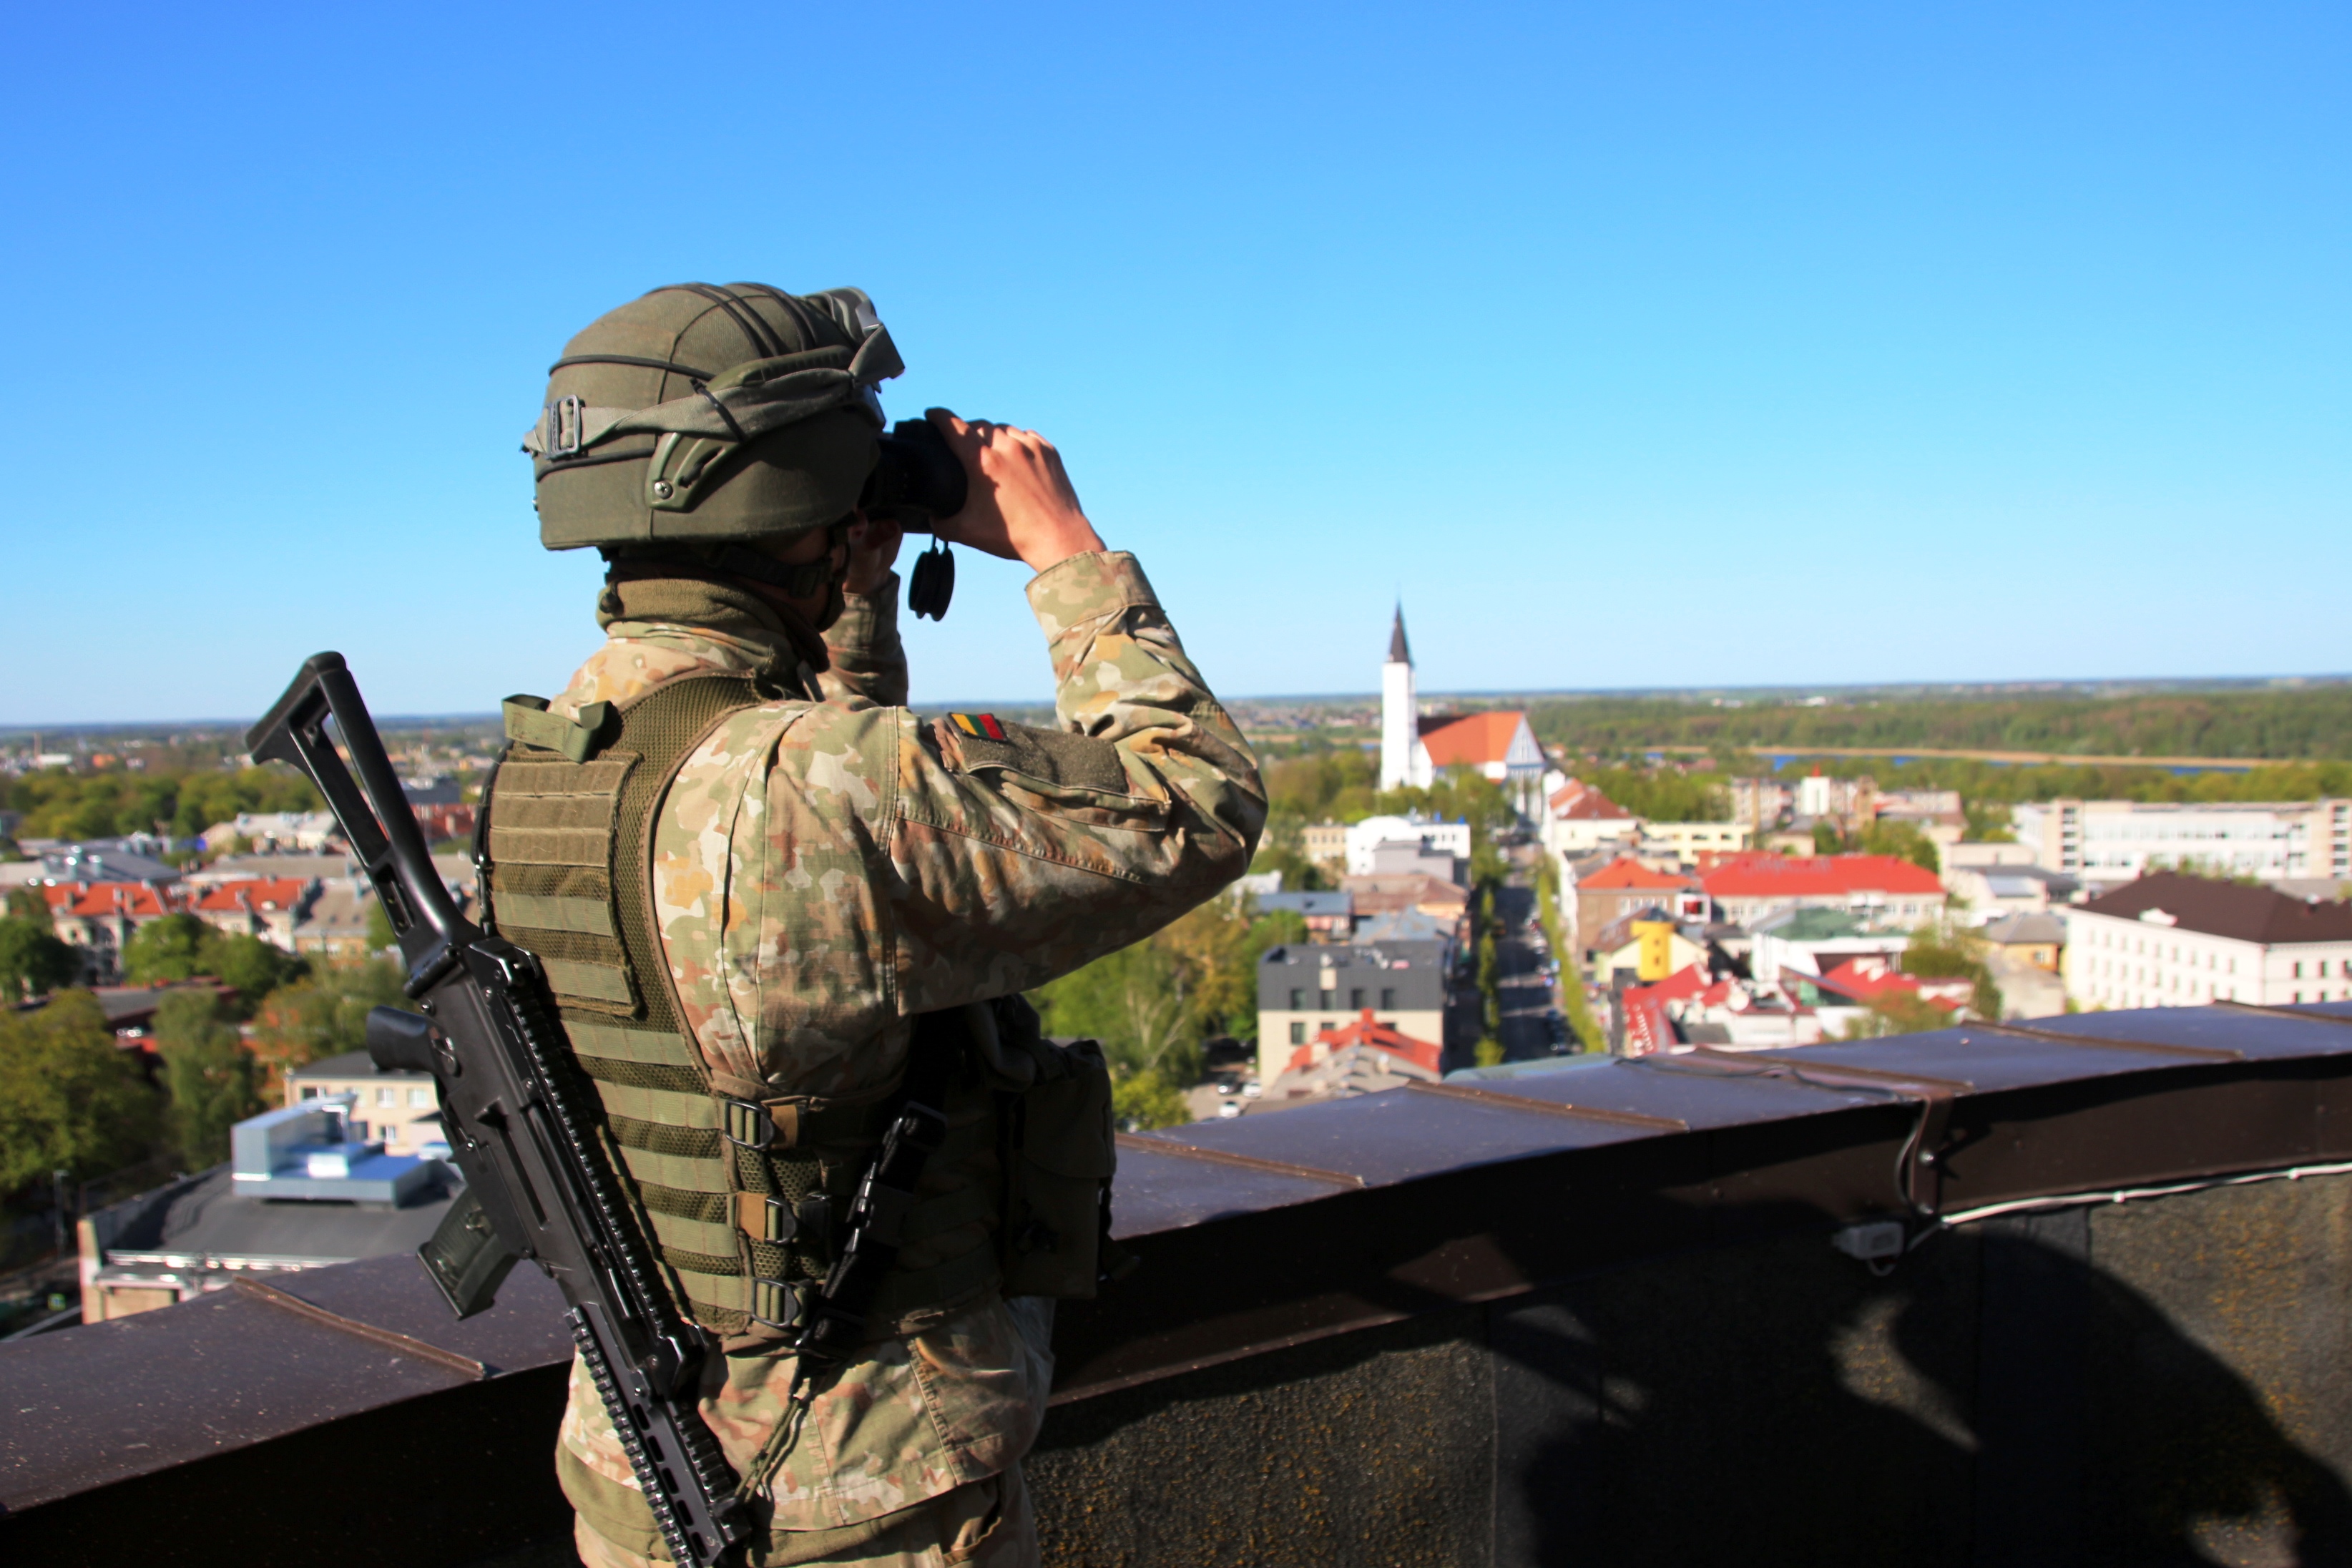 Personnel uses binoculars on rooftop.